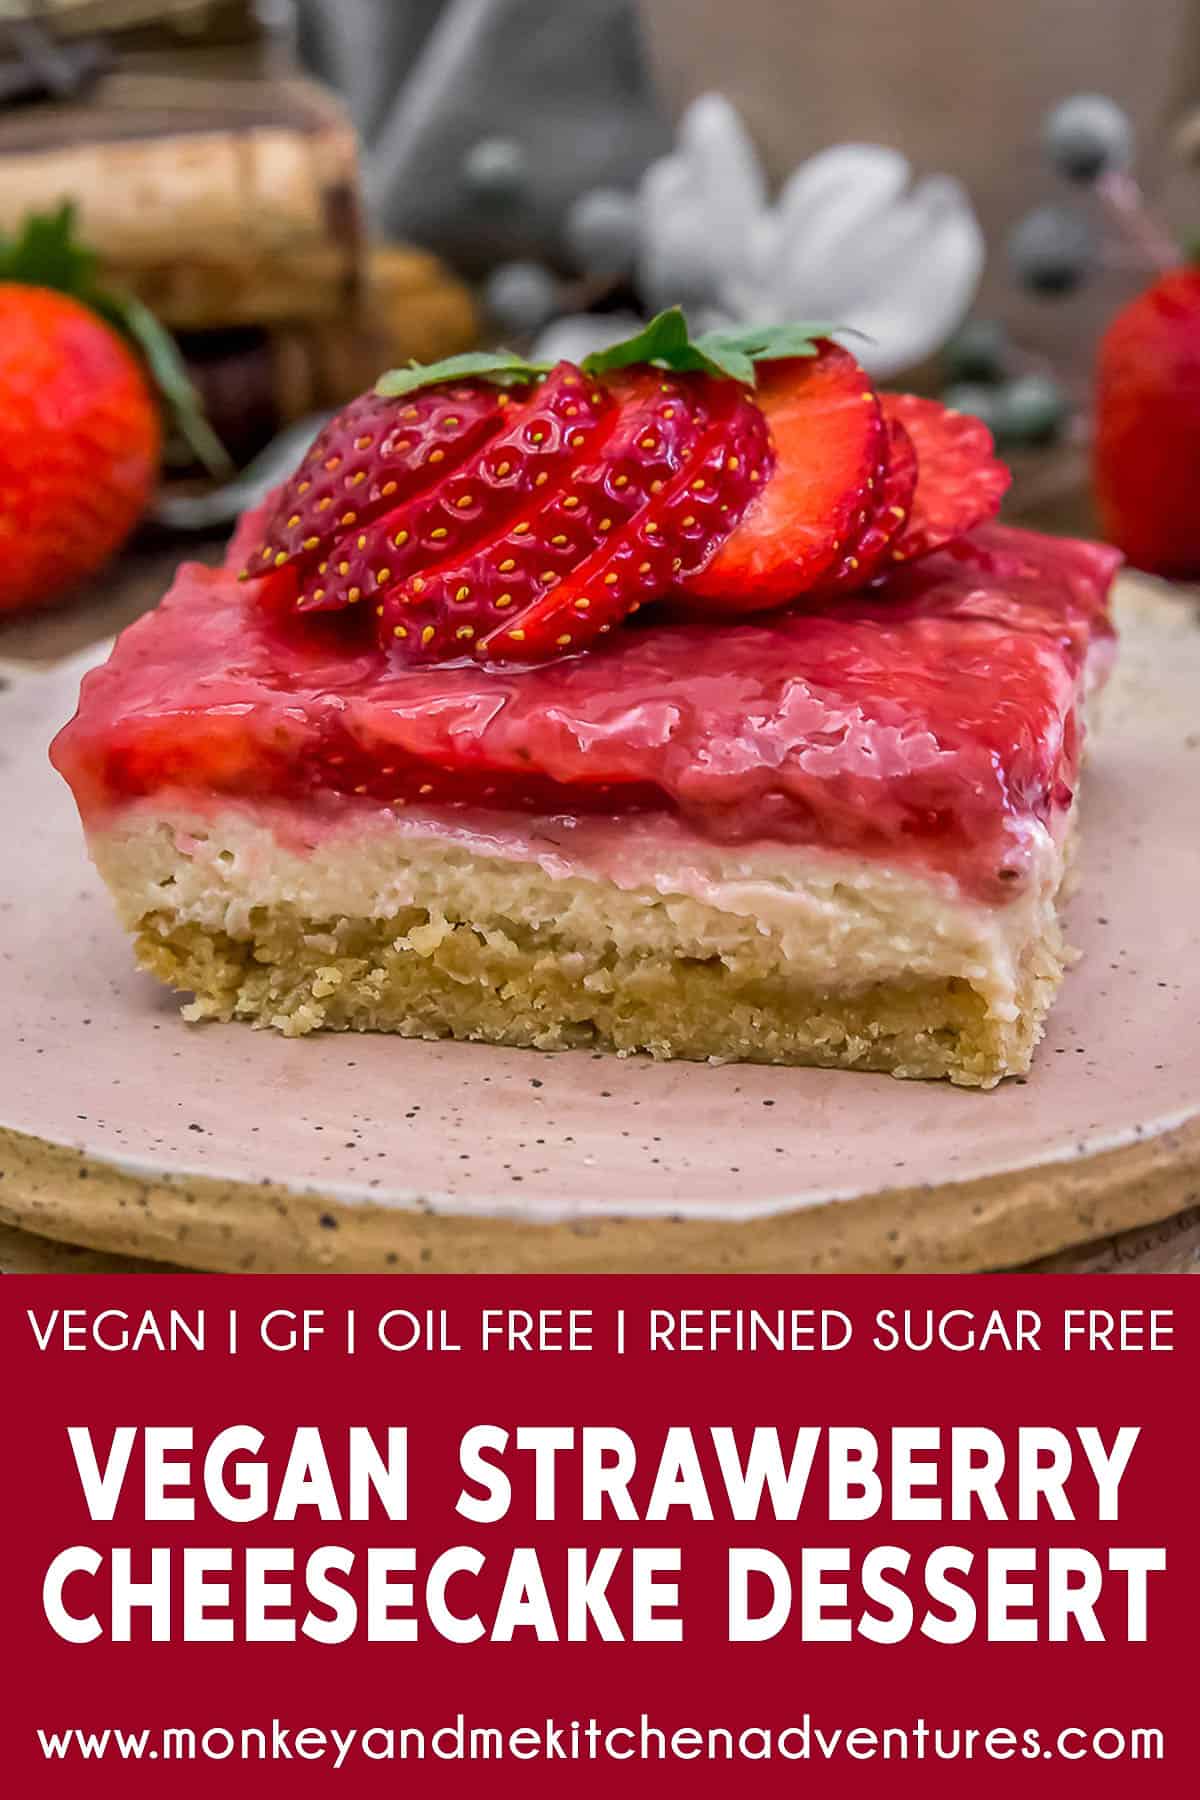 Vegan Strawberry Cheesecake Dessert with text description